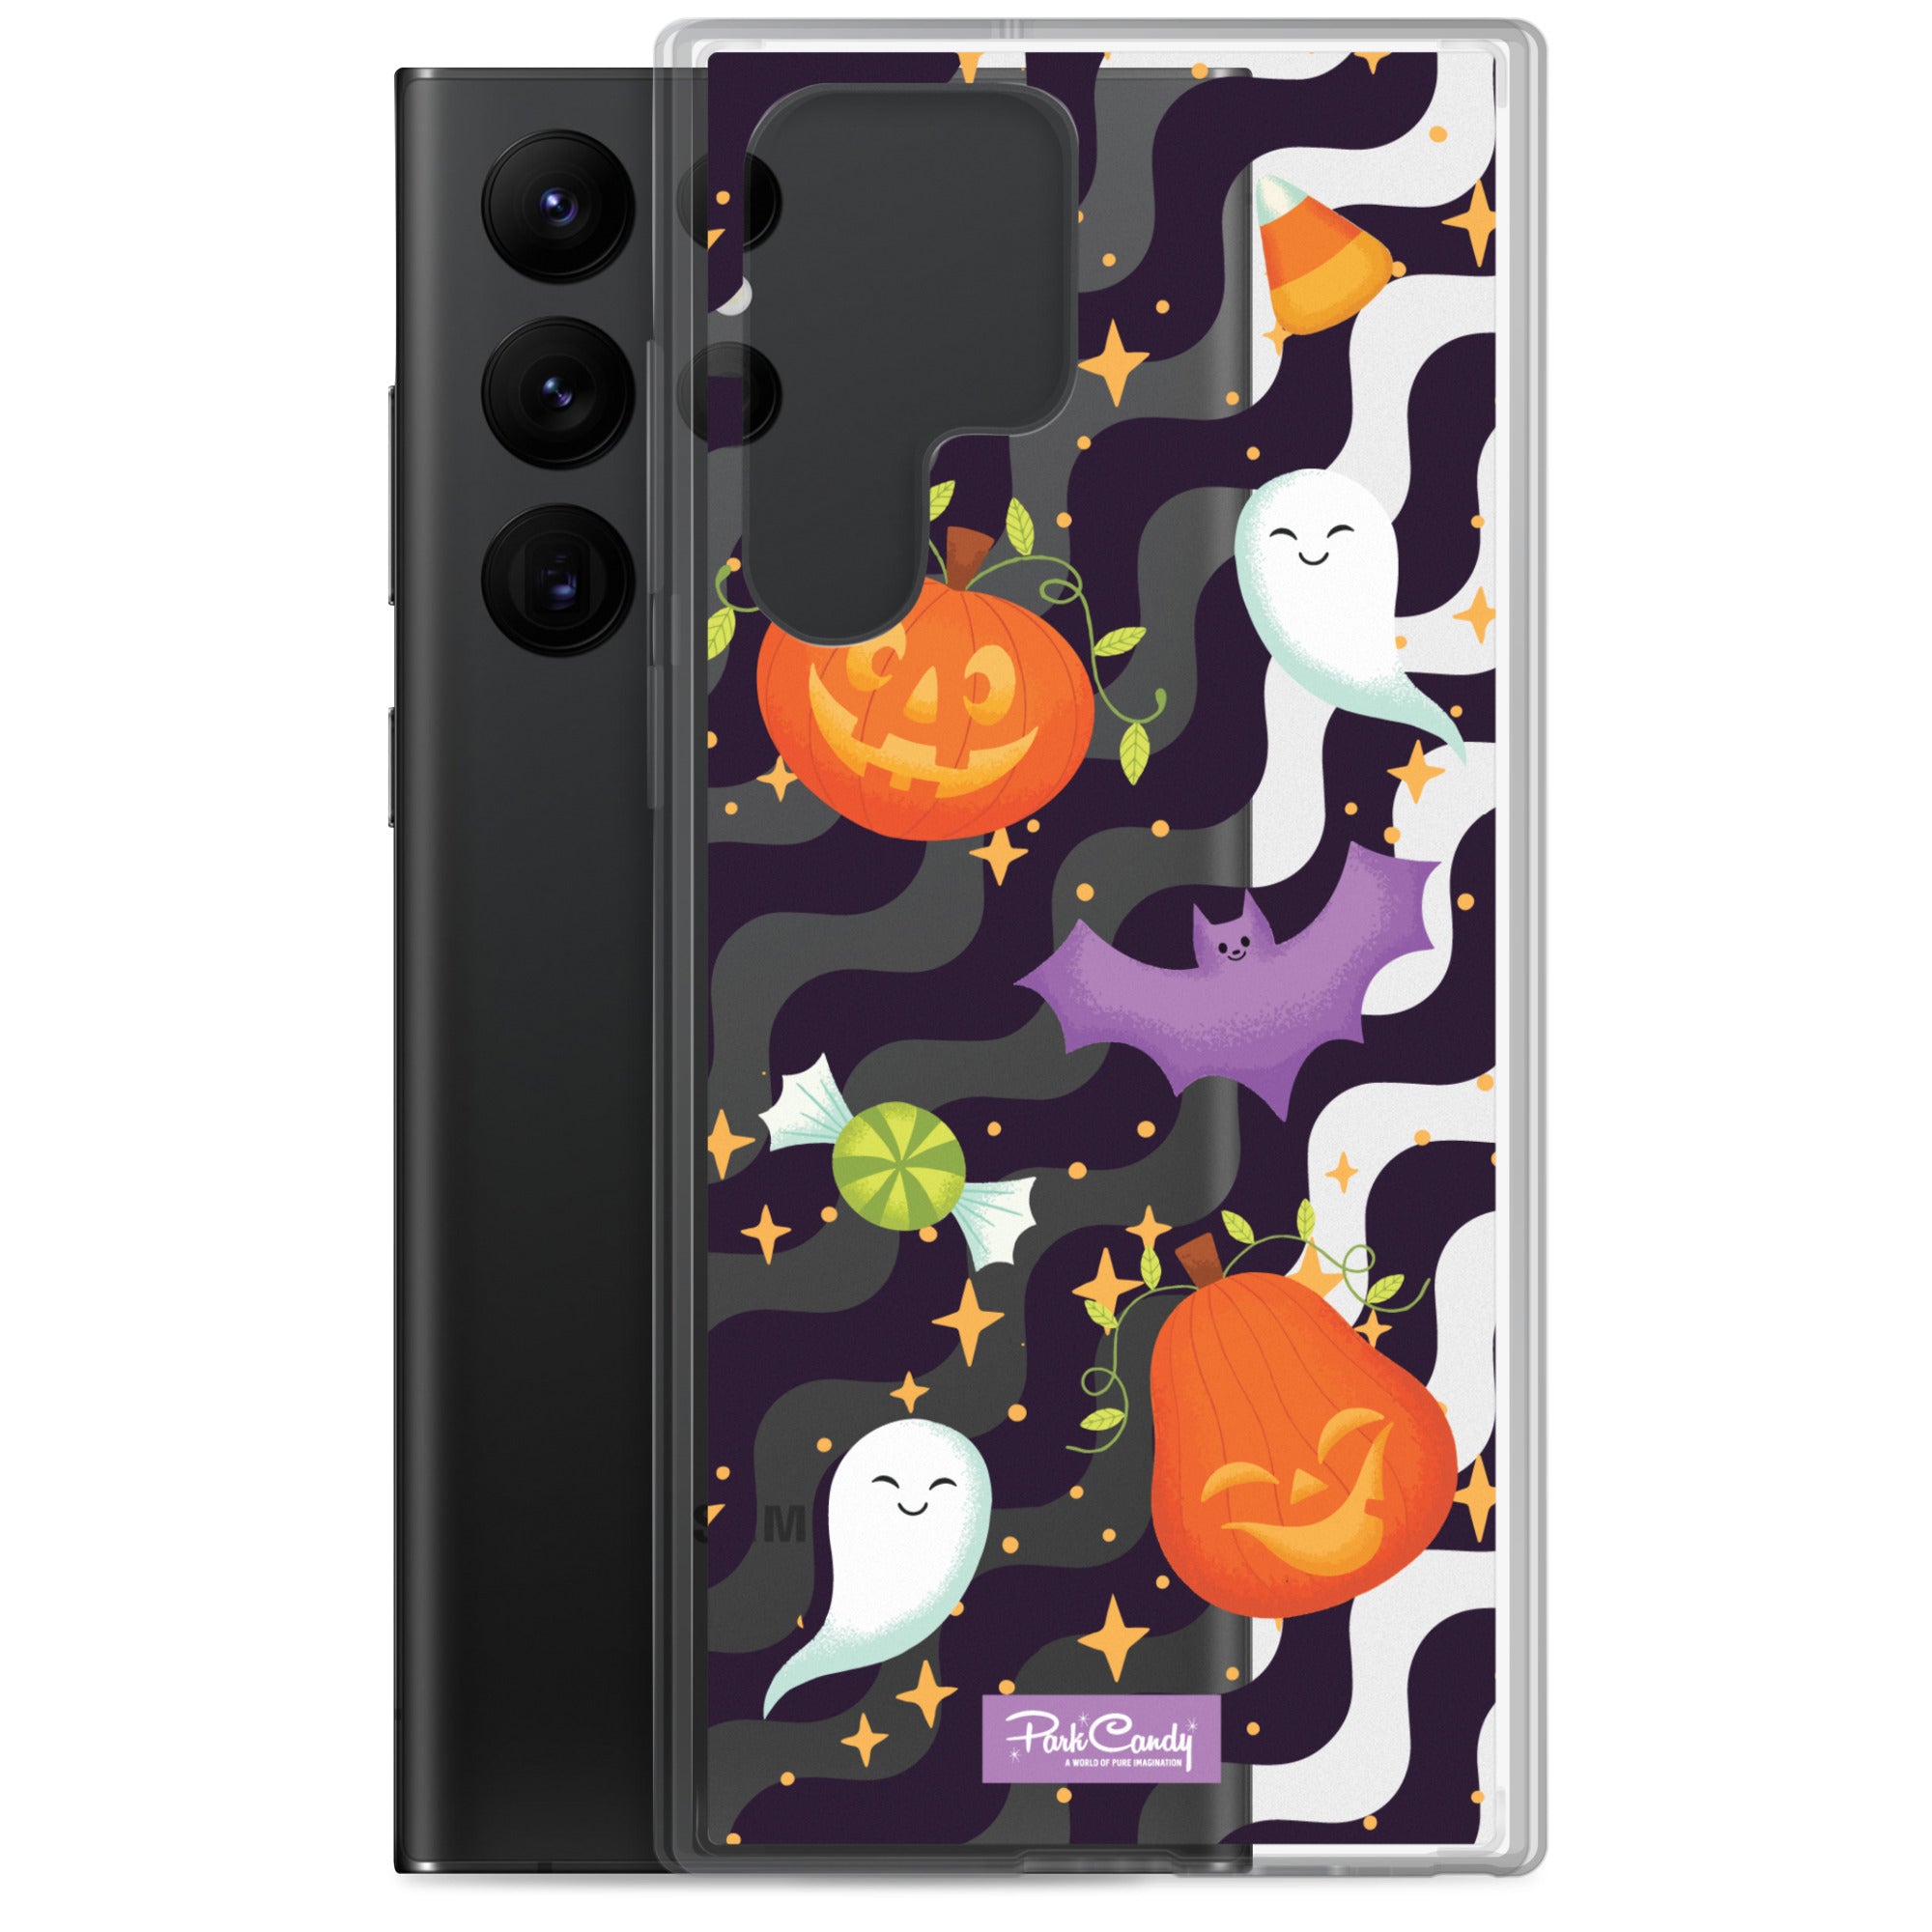 Spooky Treats Samsung Case - Park Candy